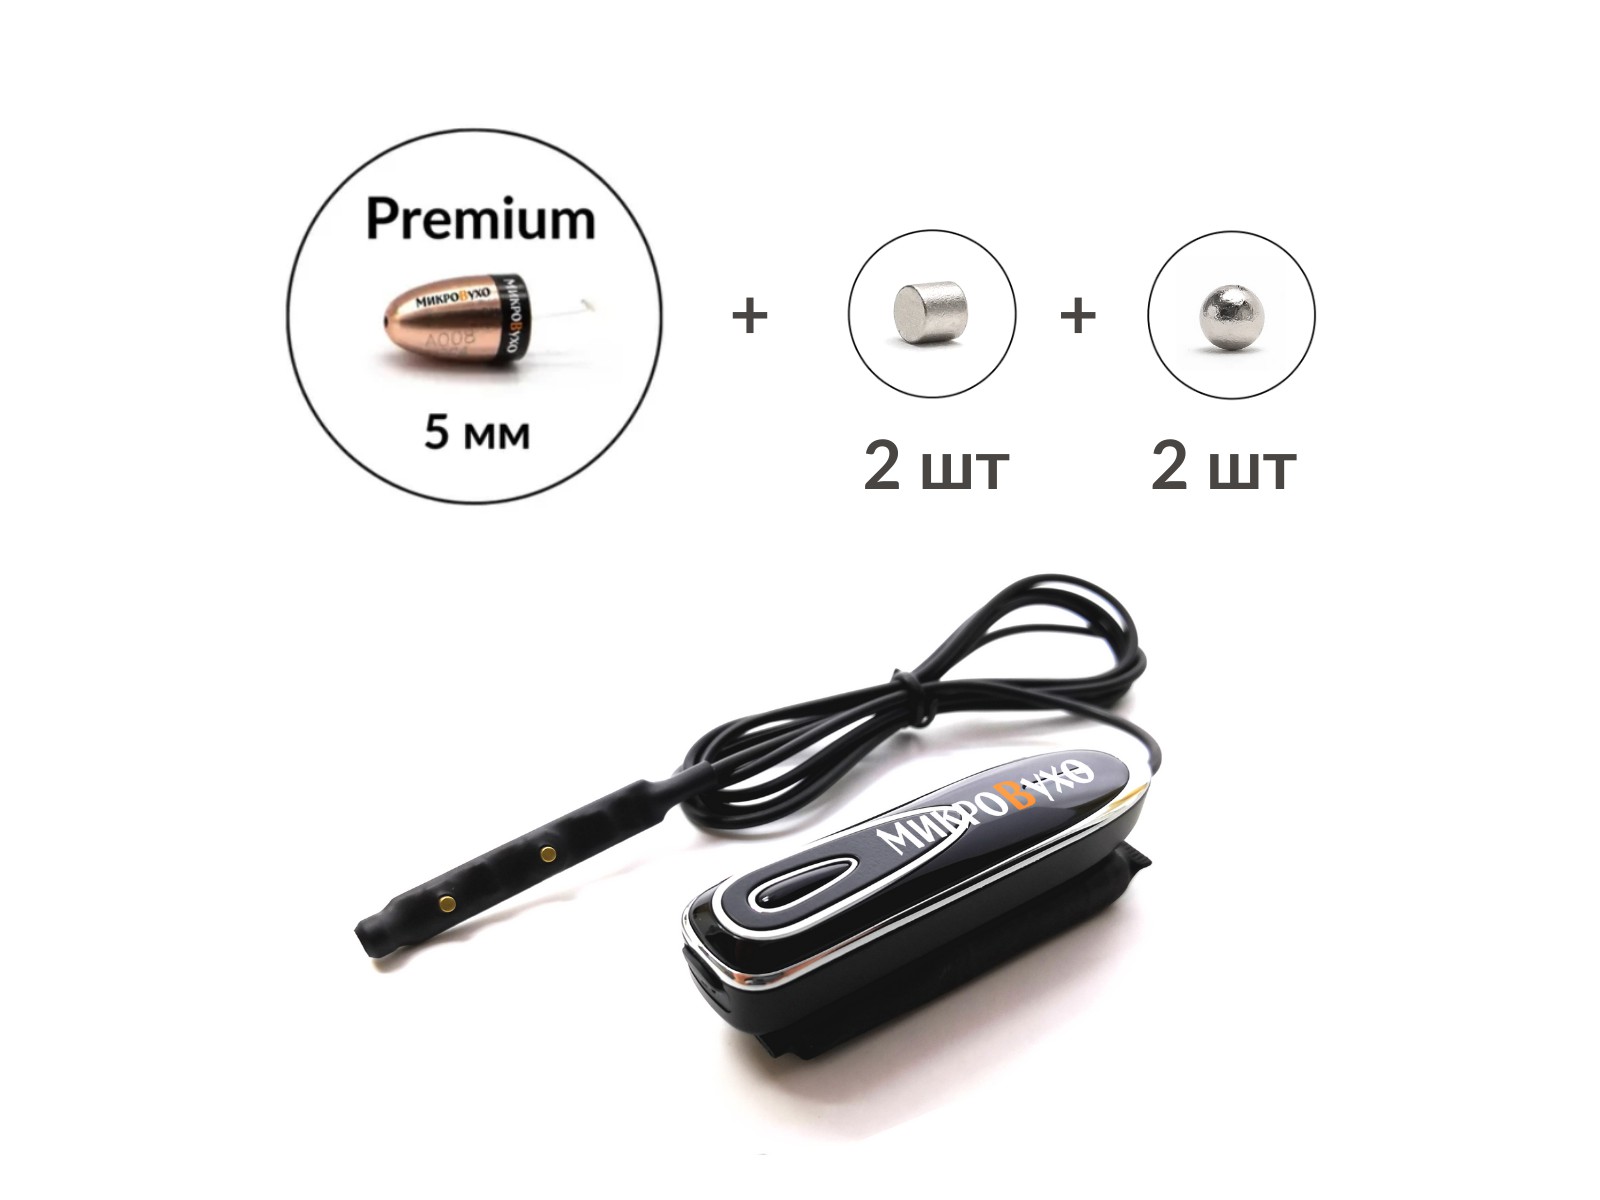 Аренда микронаушника Bluetooth Box Premier Plus с капсулой Premium и магнитами 2 мм 2